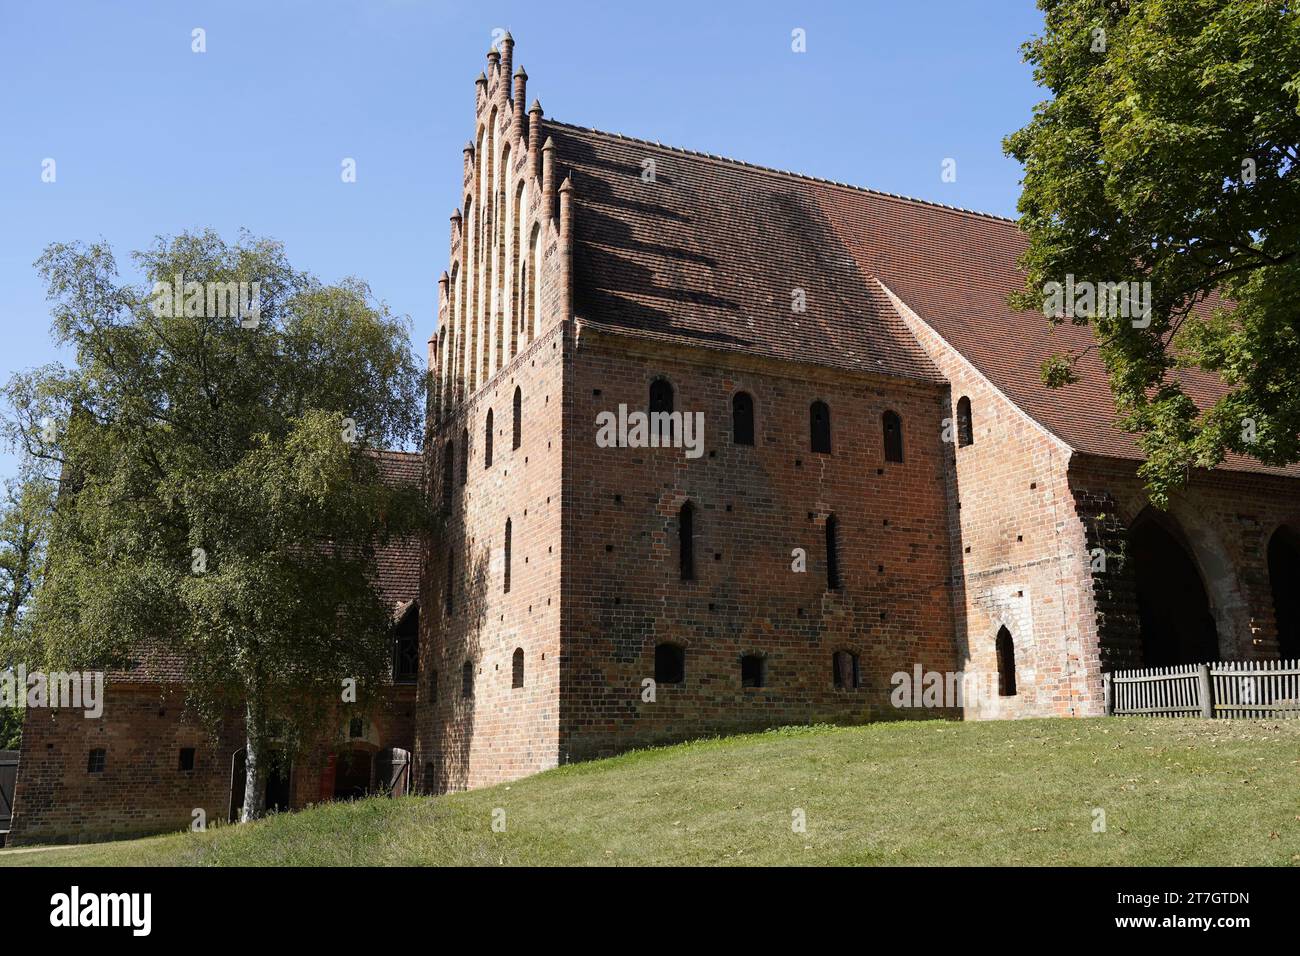 Chorin Monastery, medieval brick Gothic, Chorin Monastery in the district of Barnim in Brandenburg, Germany Stock Photo